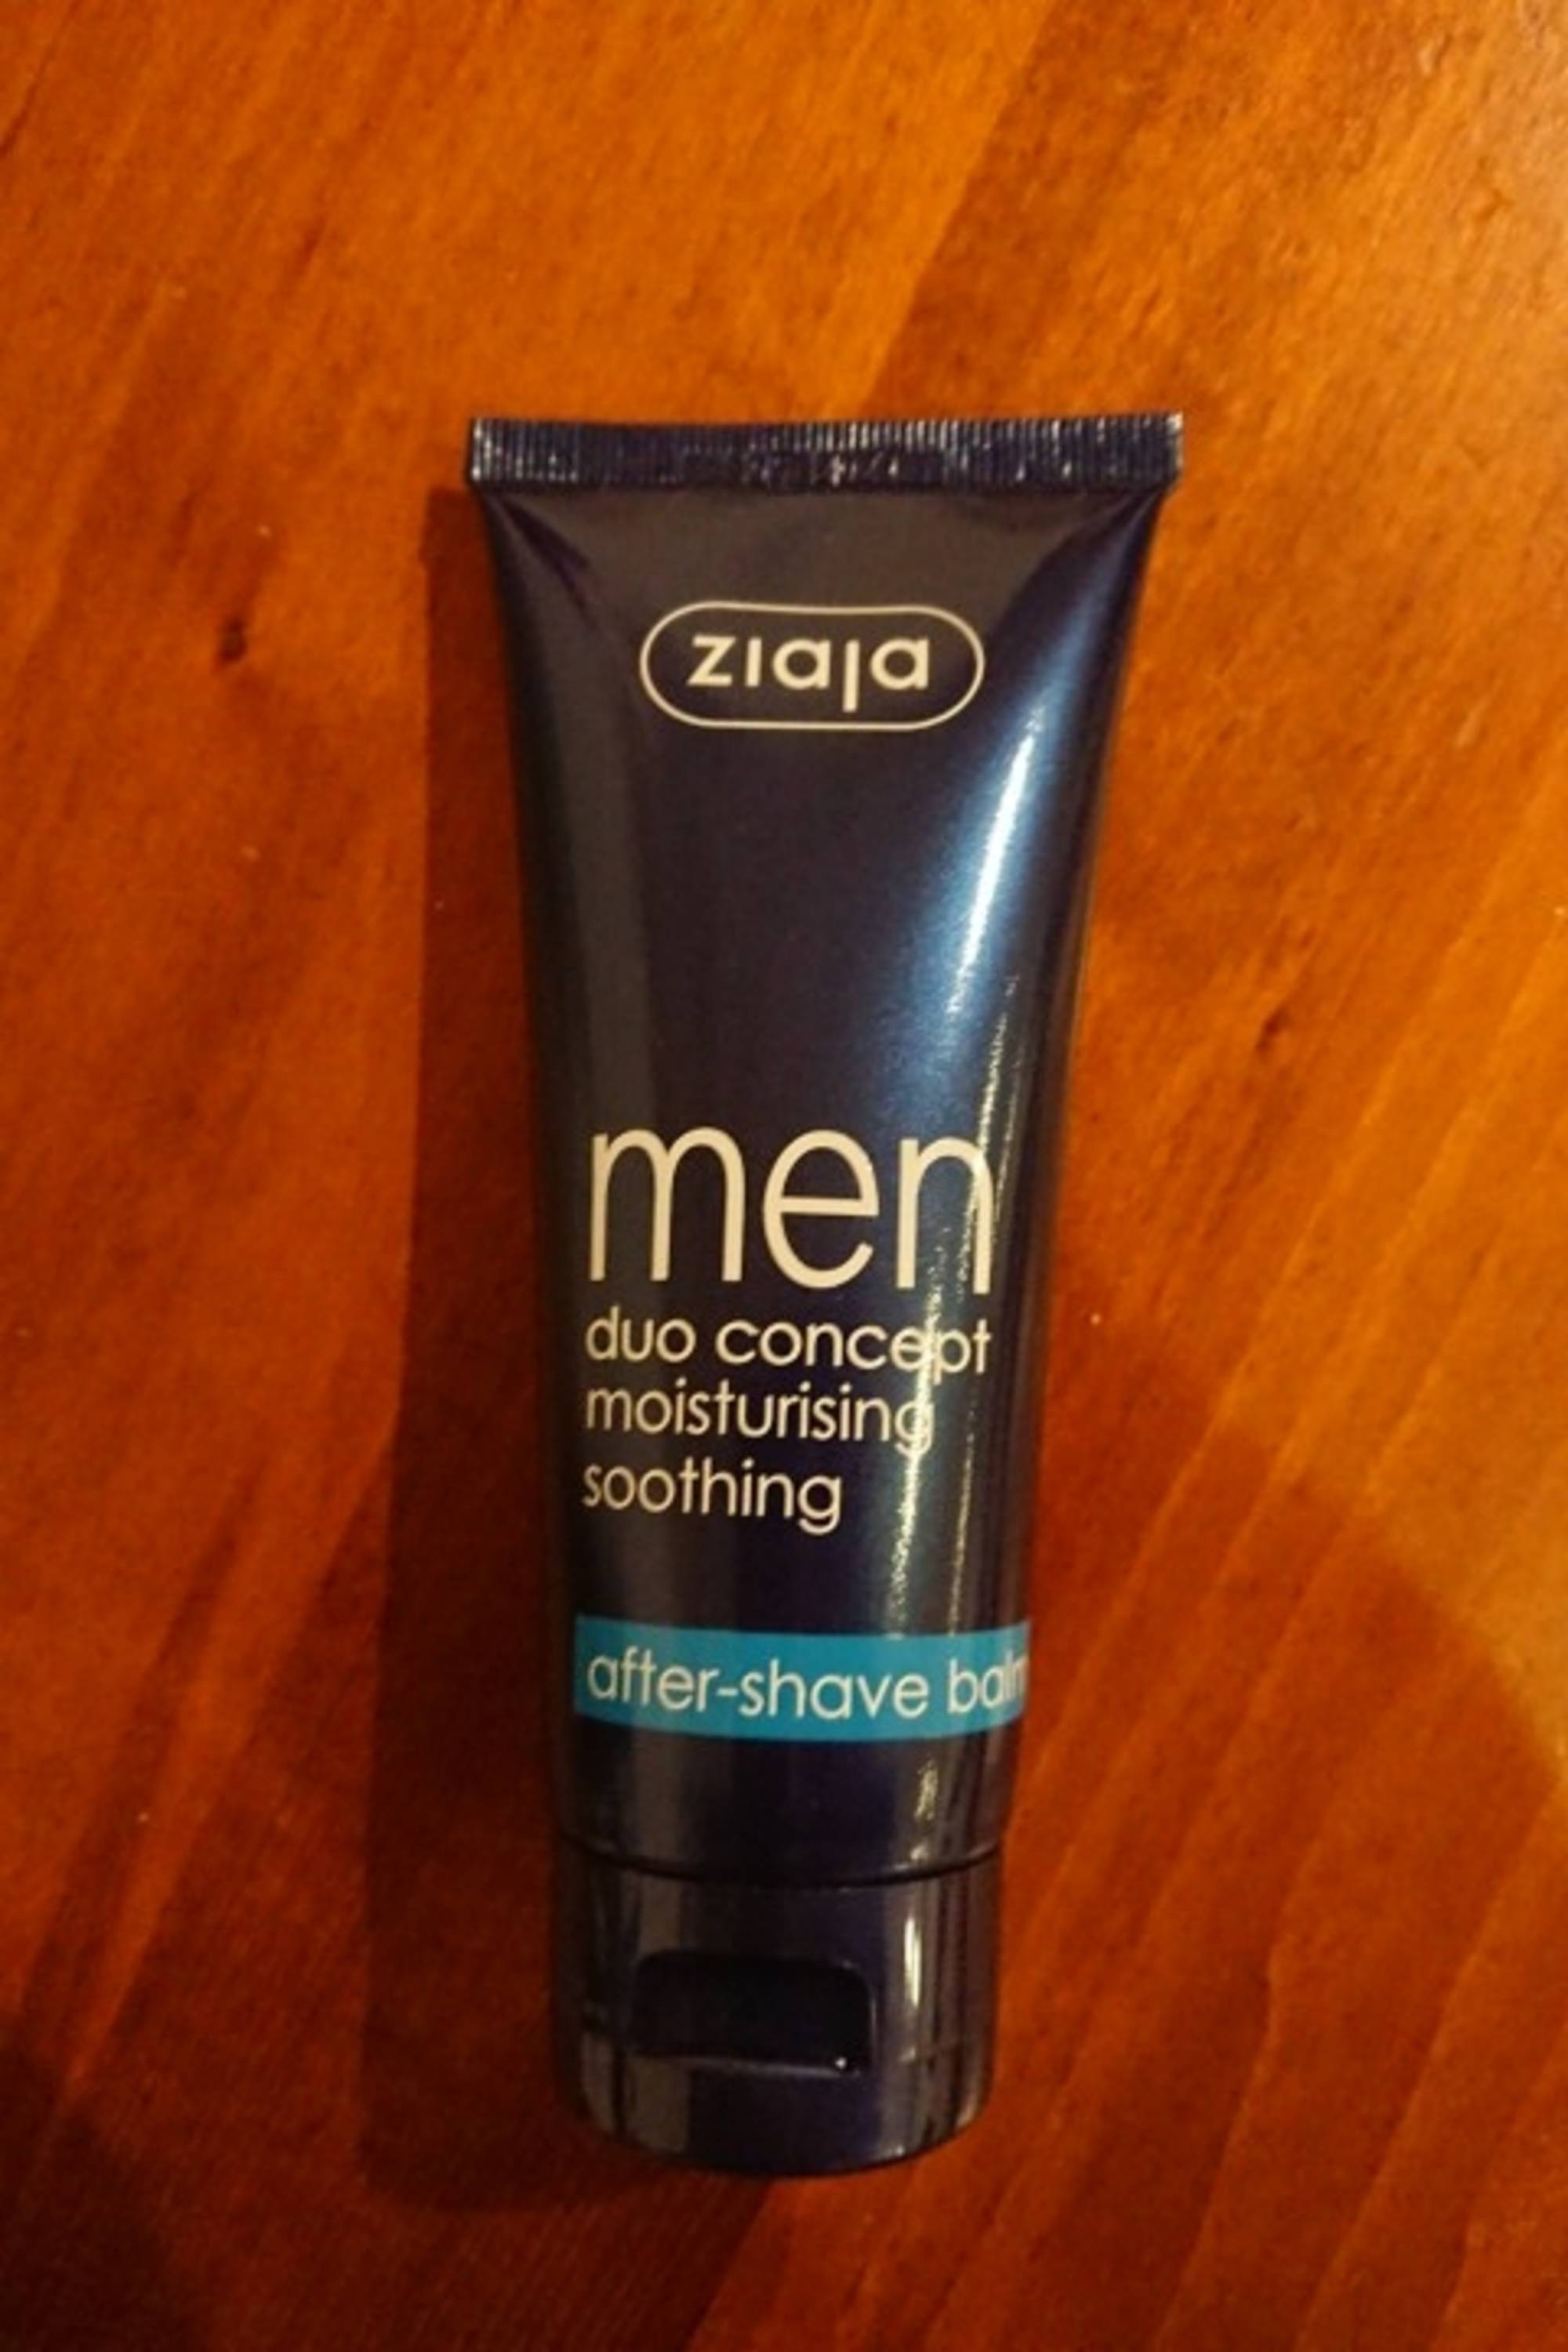 ZIAJA - Men - After-shave balm